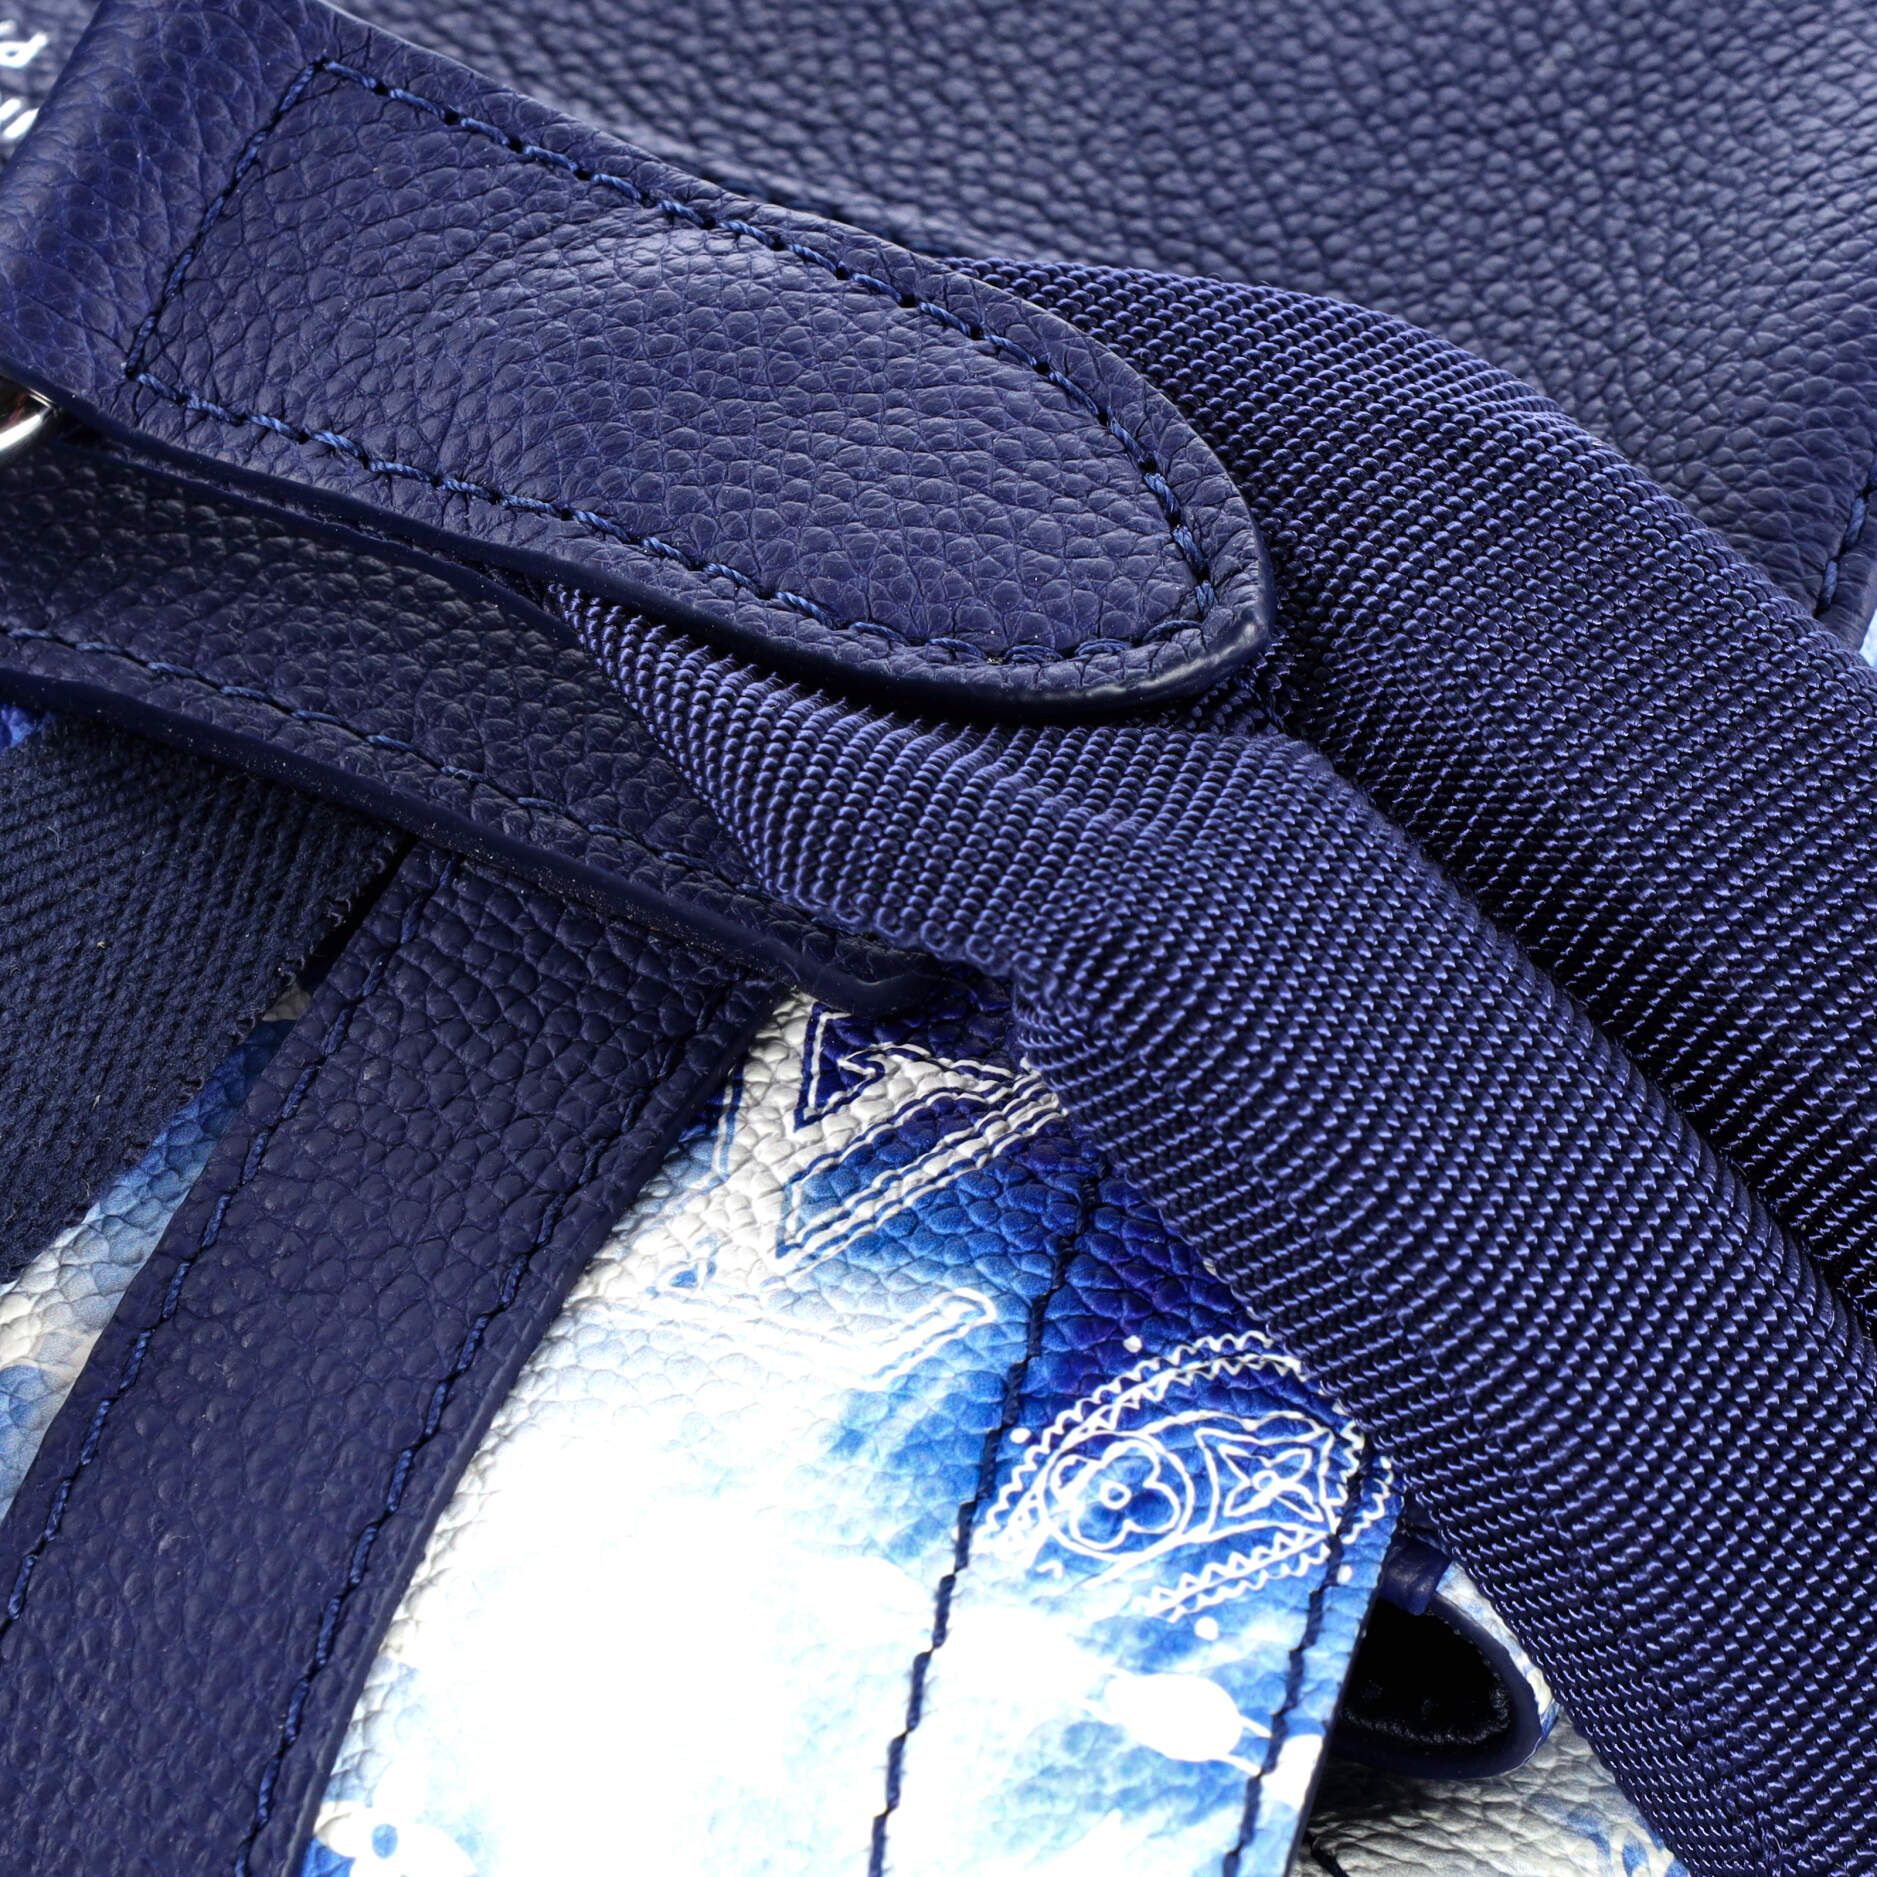 Louis Vuitton Randonnee Backpack Limited Edition Monogram Bandana Leather PM Blue